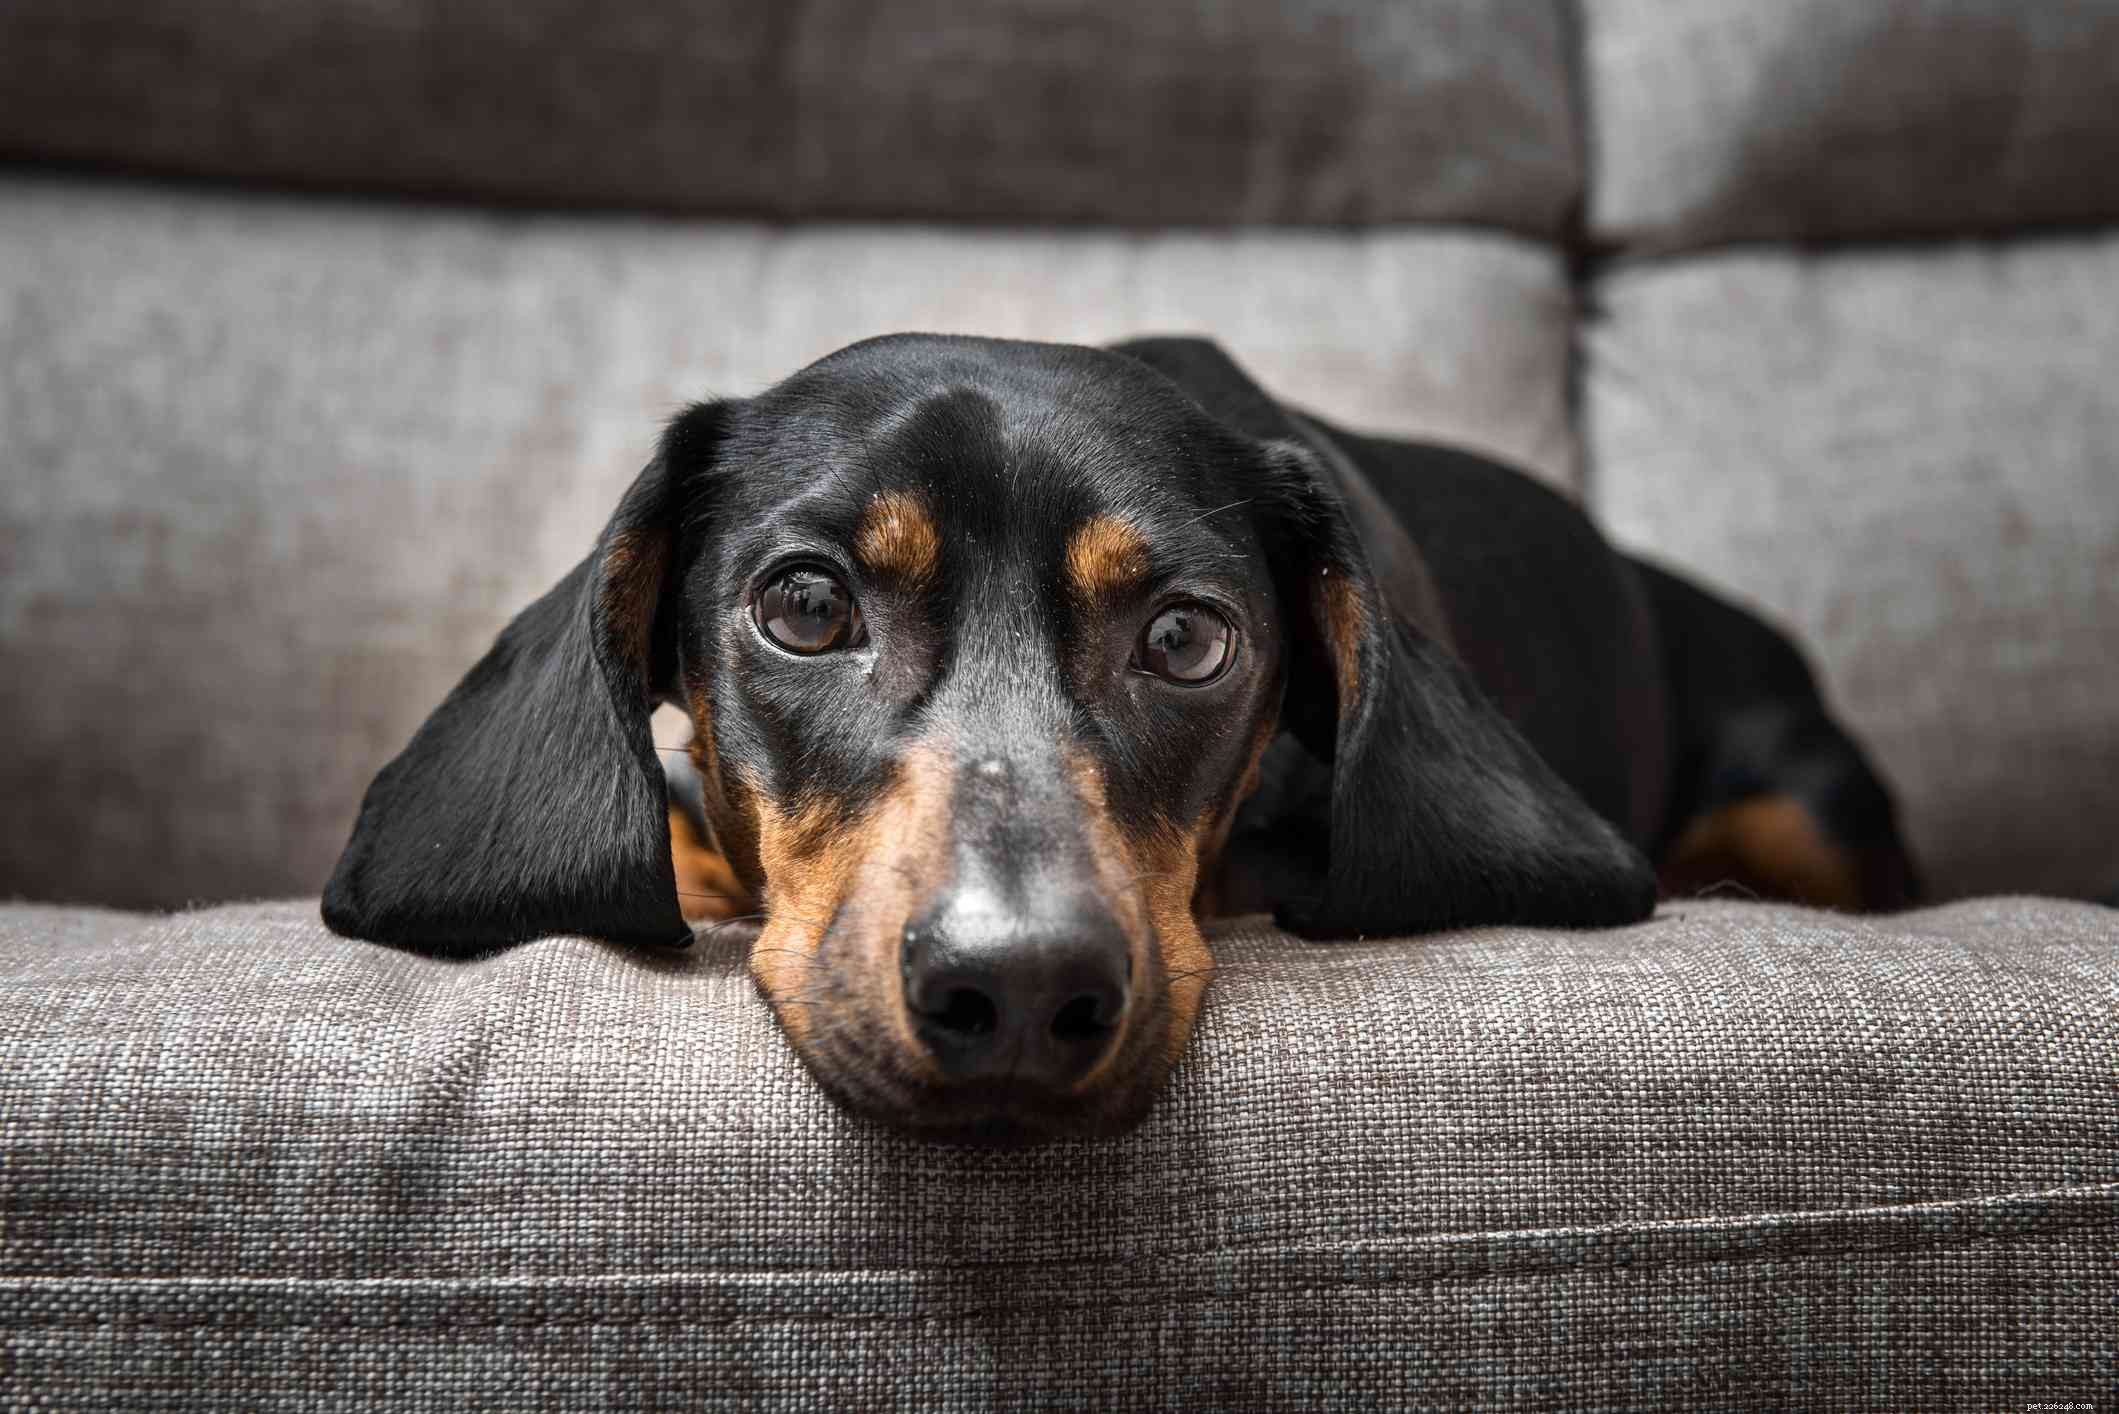 I 7 principali sintomi di insufficienza epatica nei cani